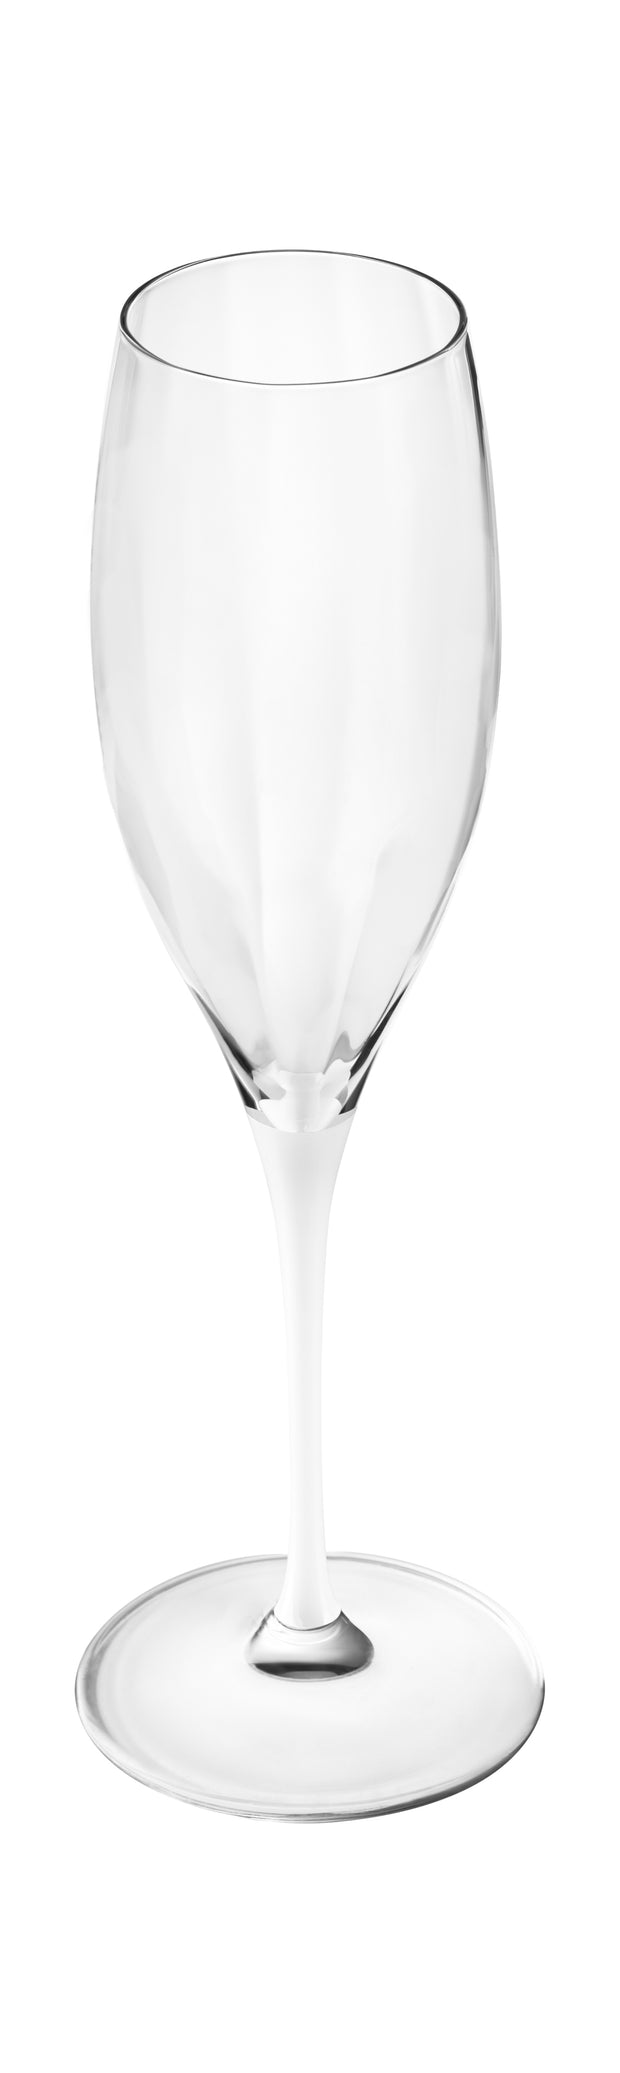 European Glass Stemmed Champagne Toasting Flutes- White Stem- 11 Oz. - Set of 6